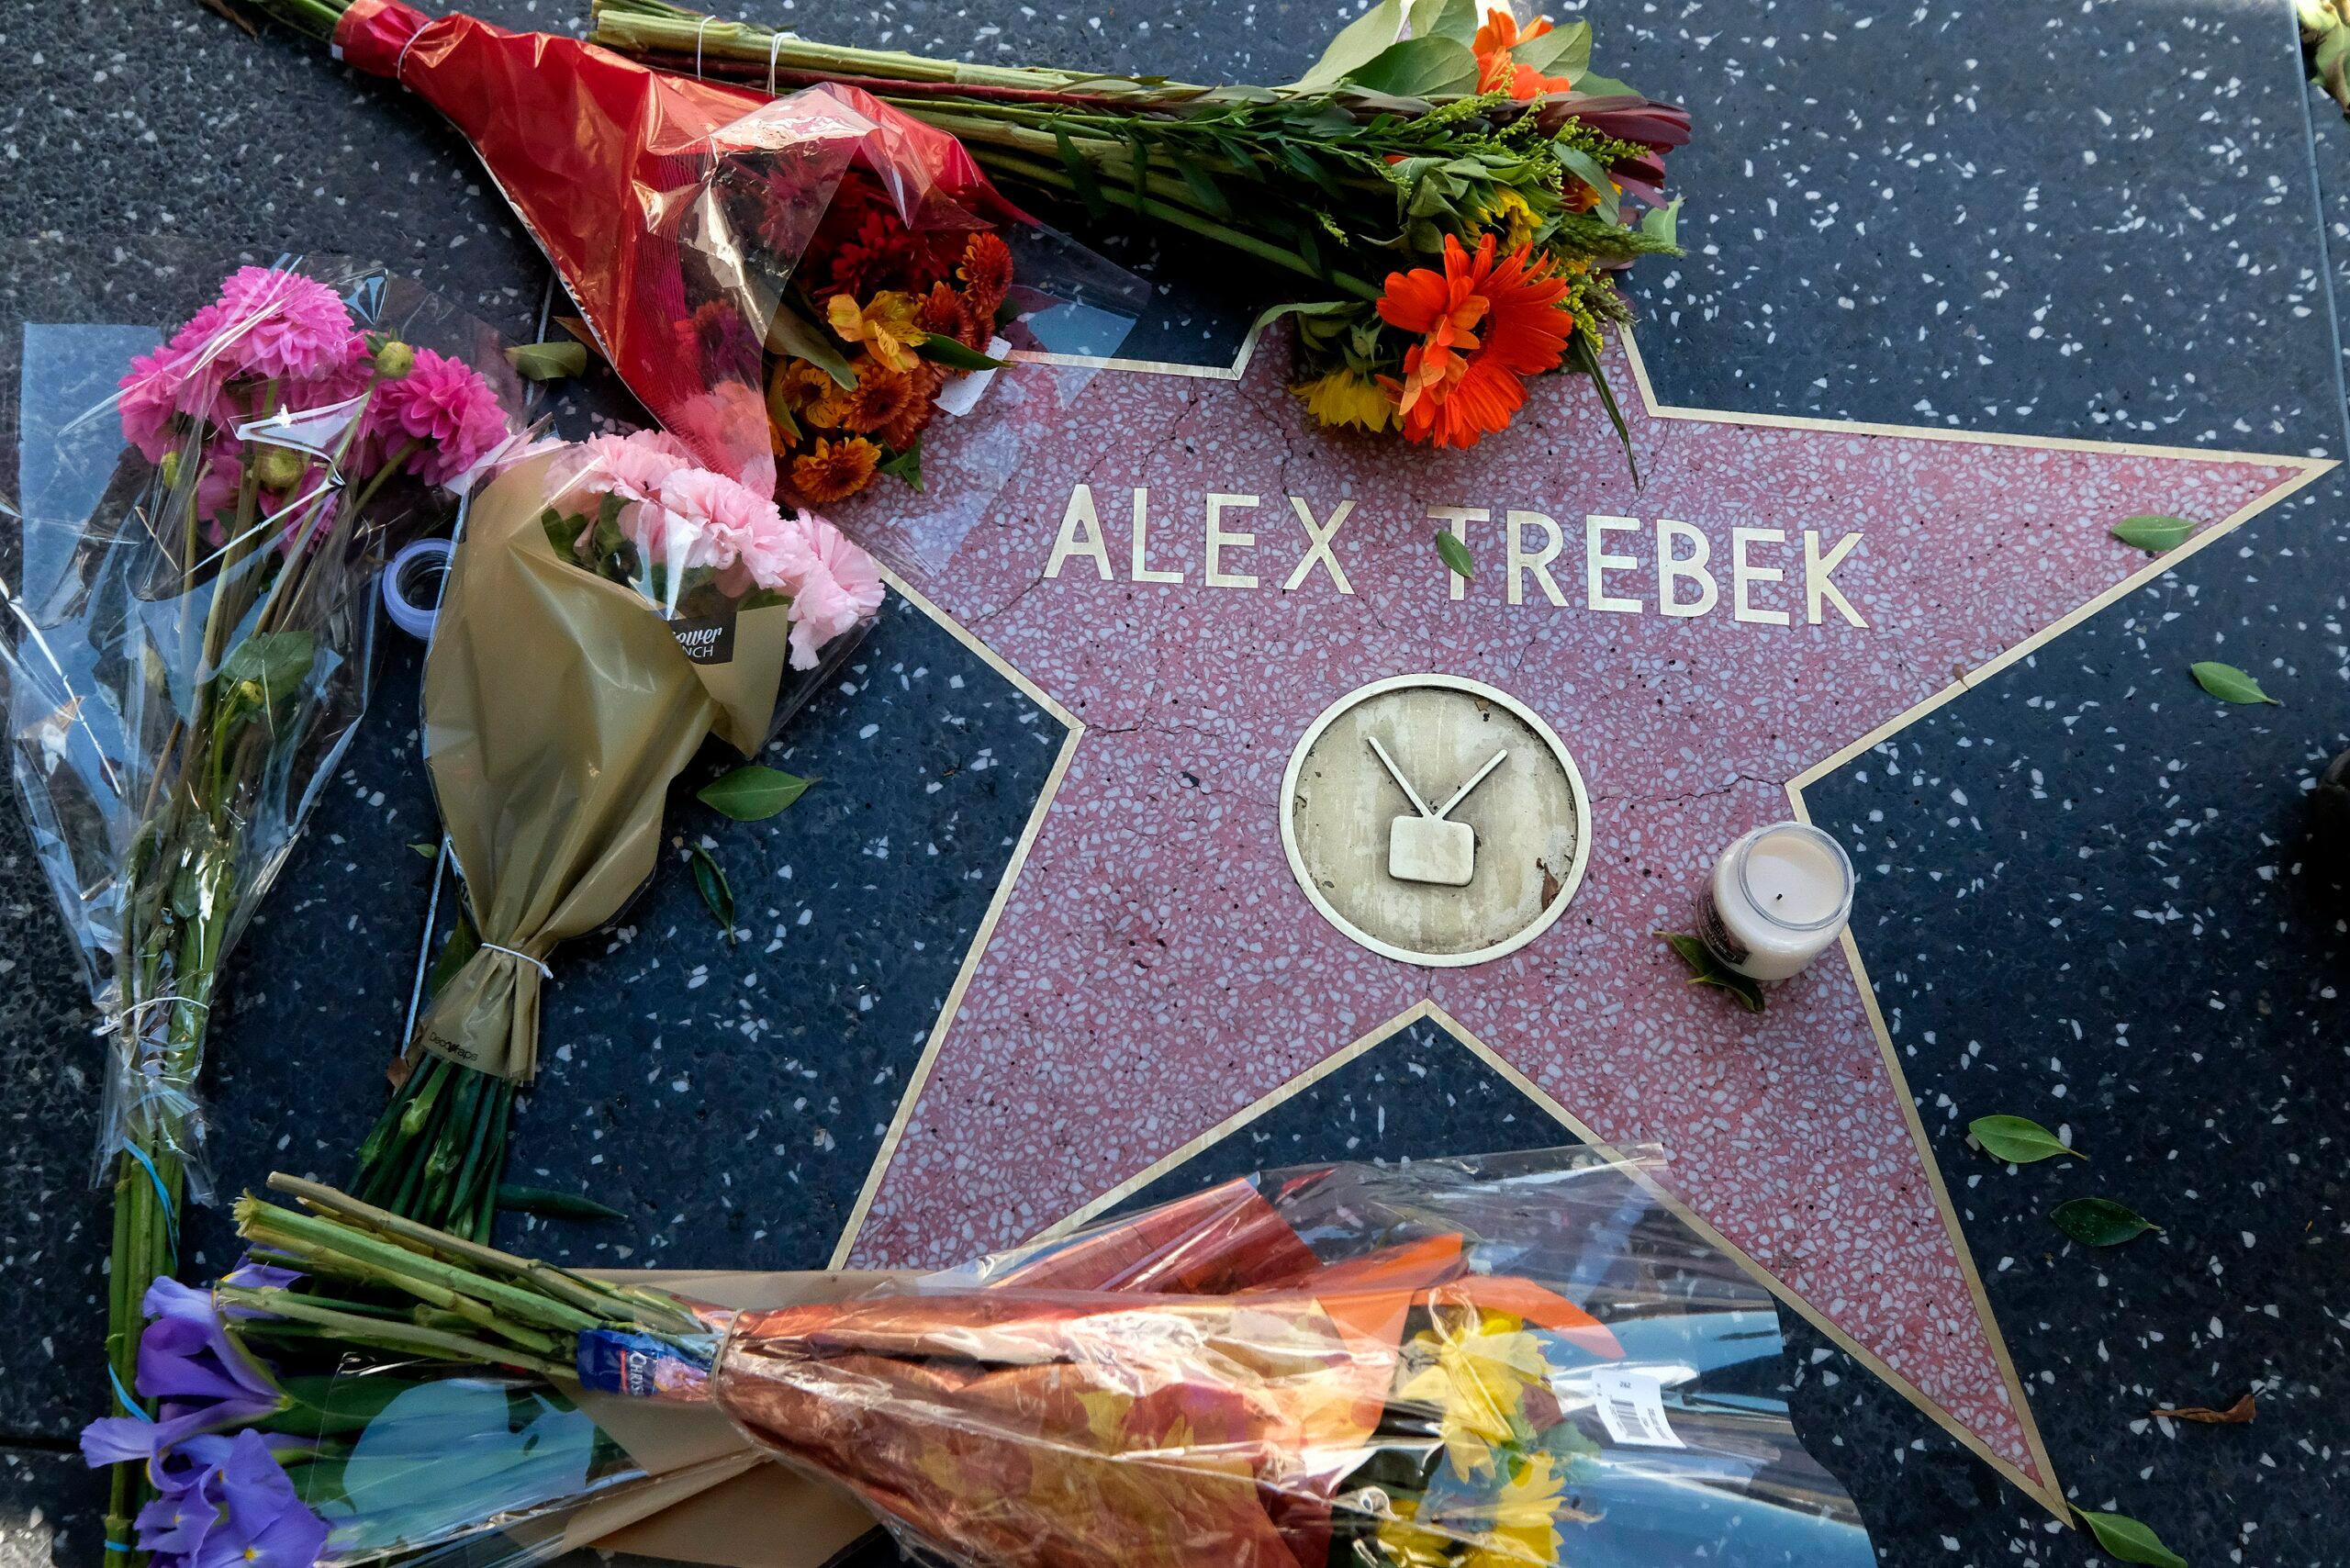 Flowers placed at Alex Trebek Star